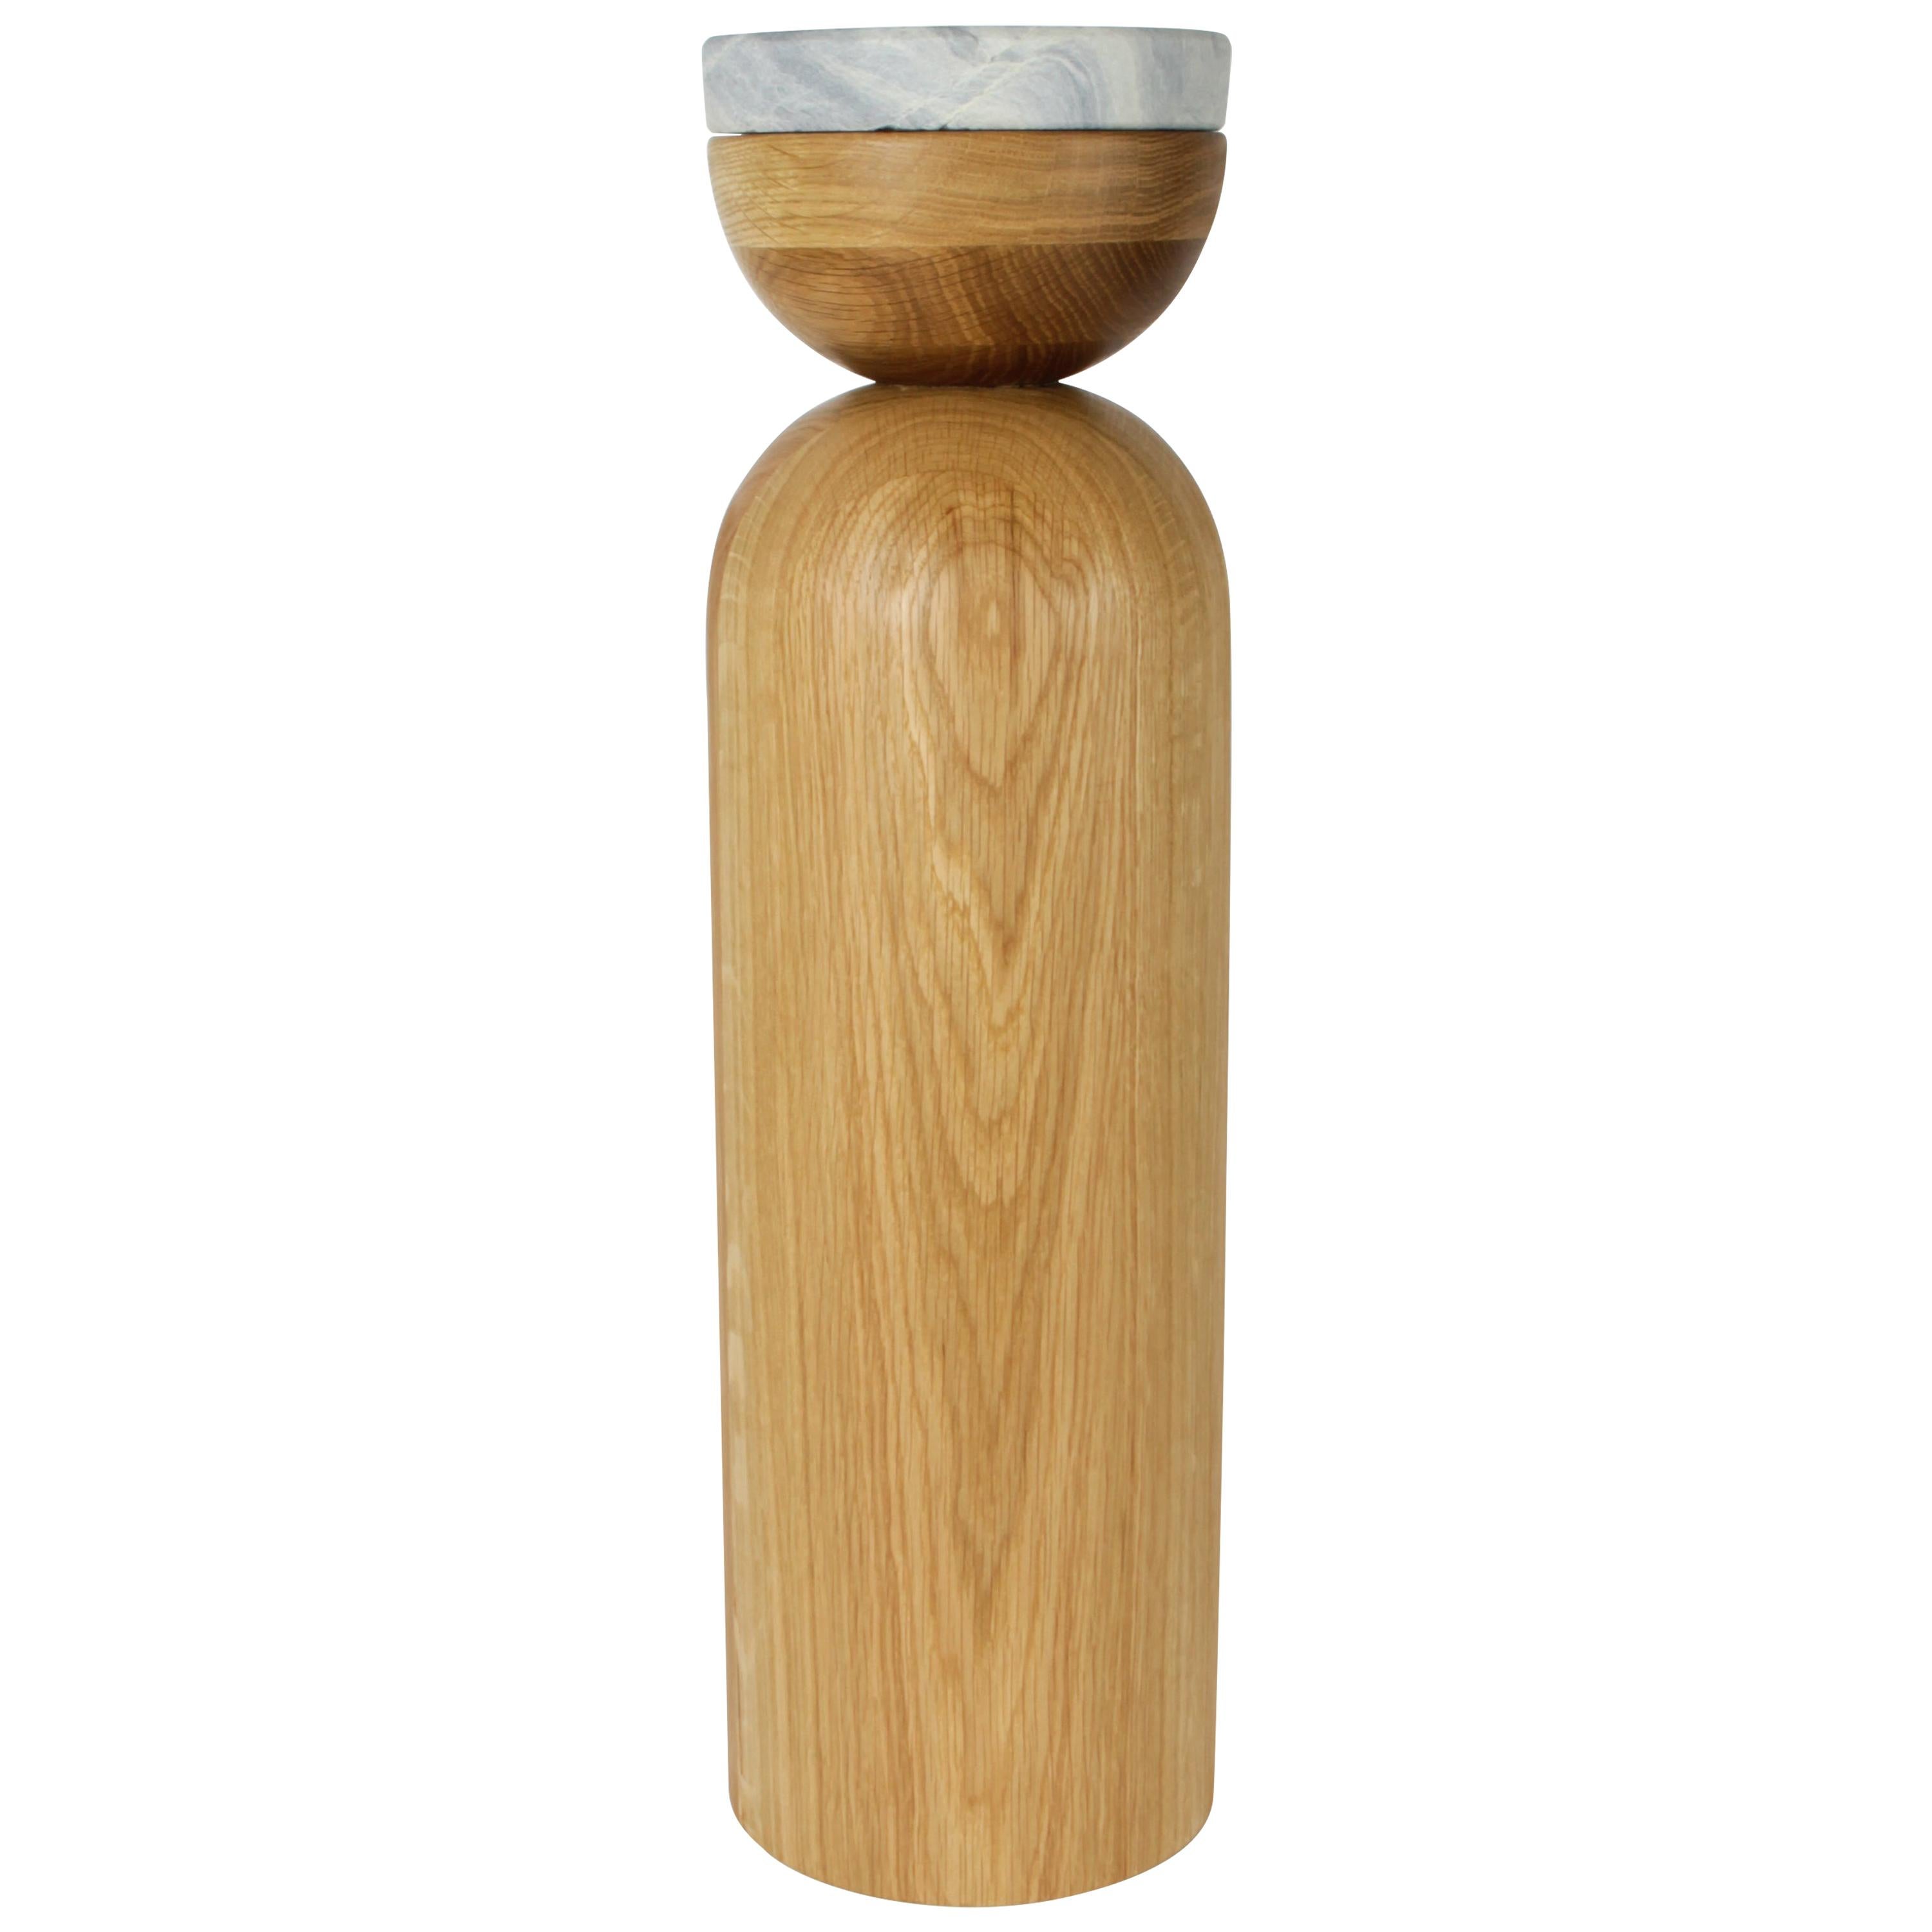 Señoritas Drink-Stand Table White Oak by SinCa Design